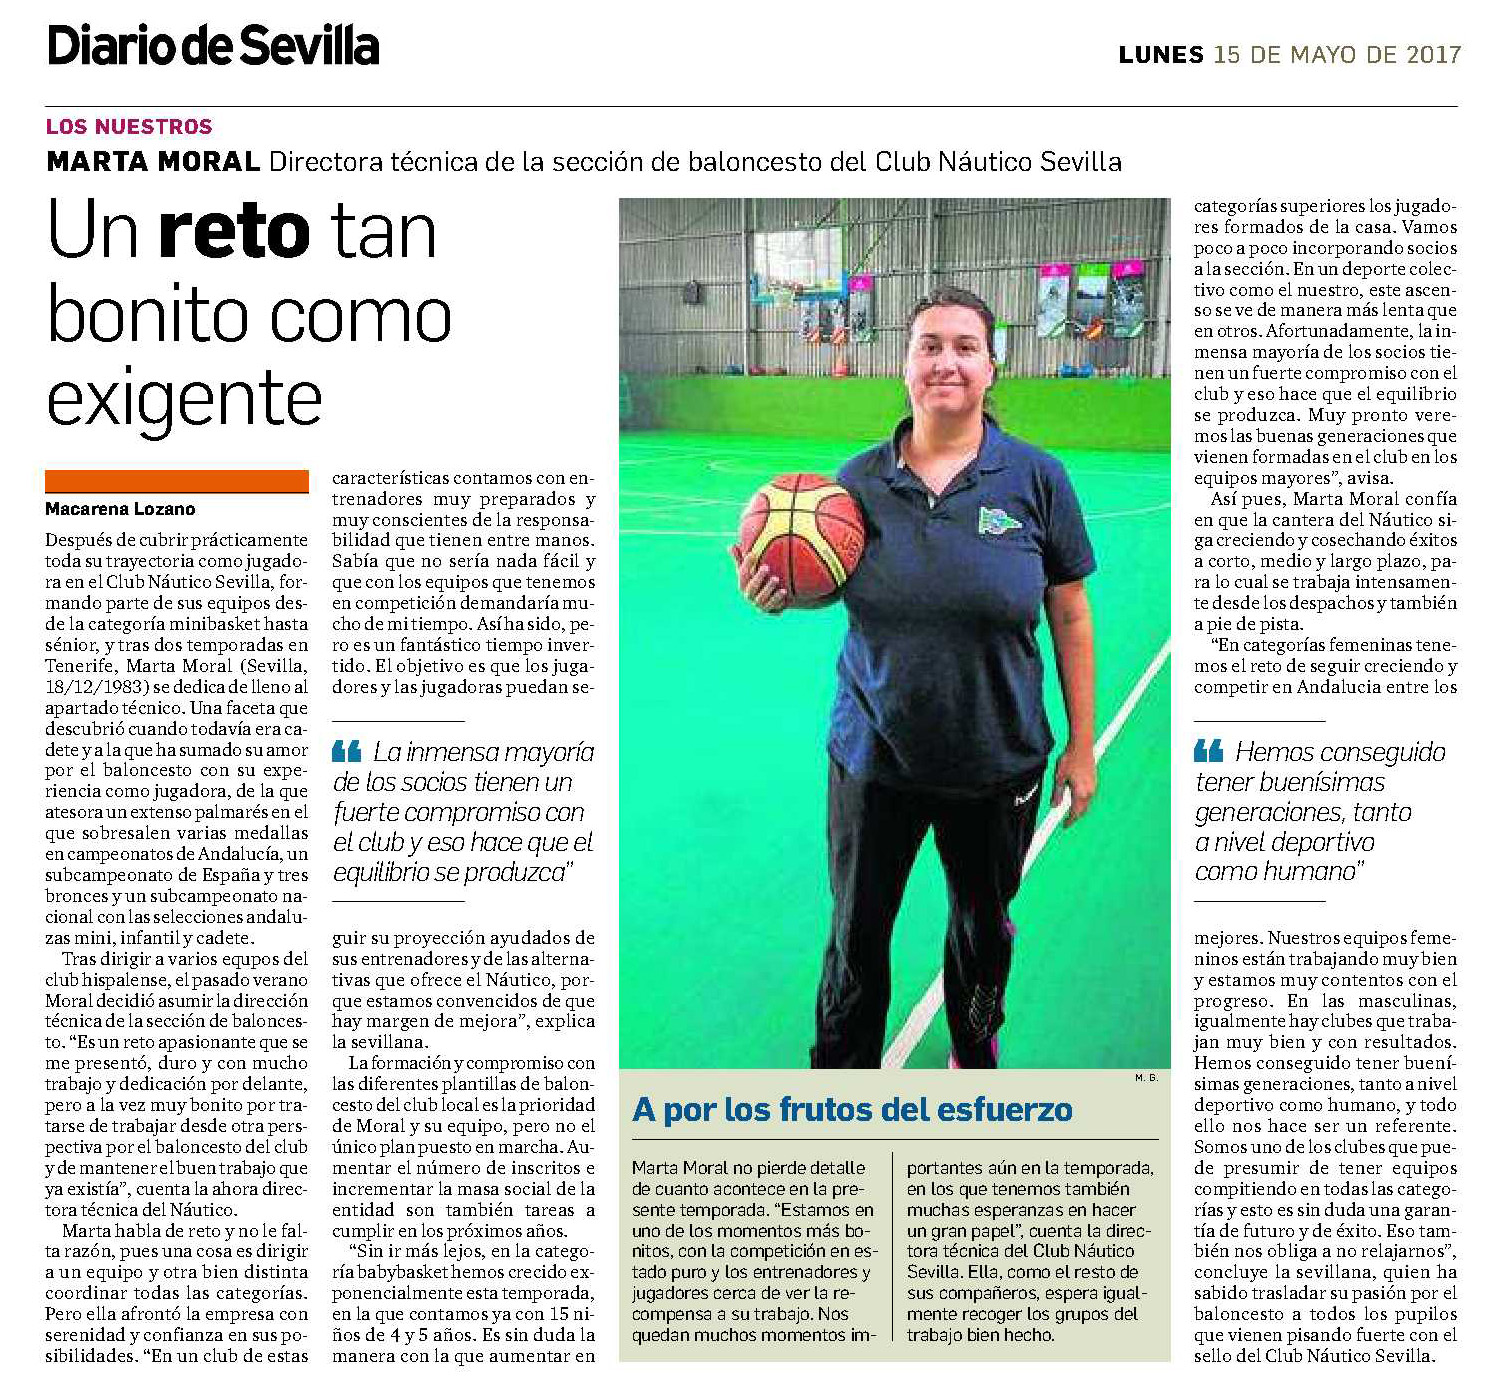 Diario de Sevilla 2017-05-15 baloncesto Marta Moral.jpg